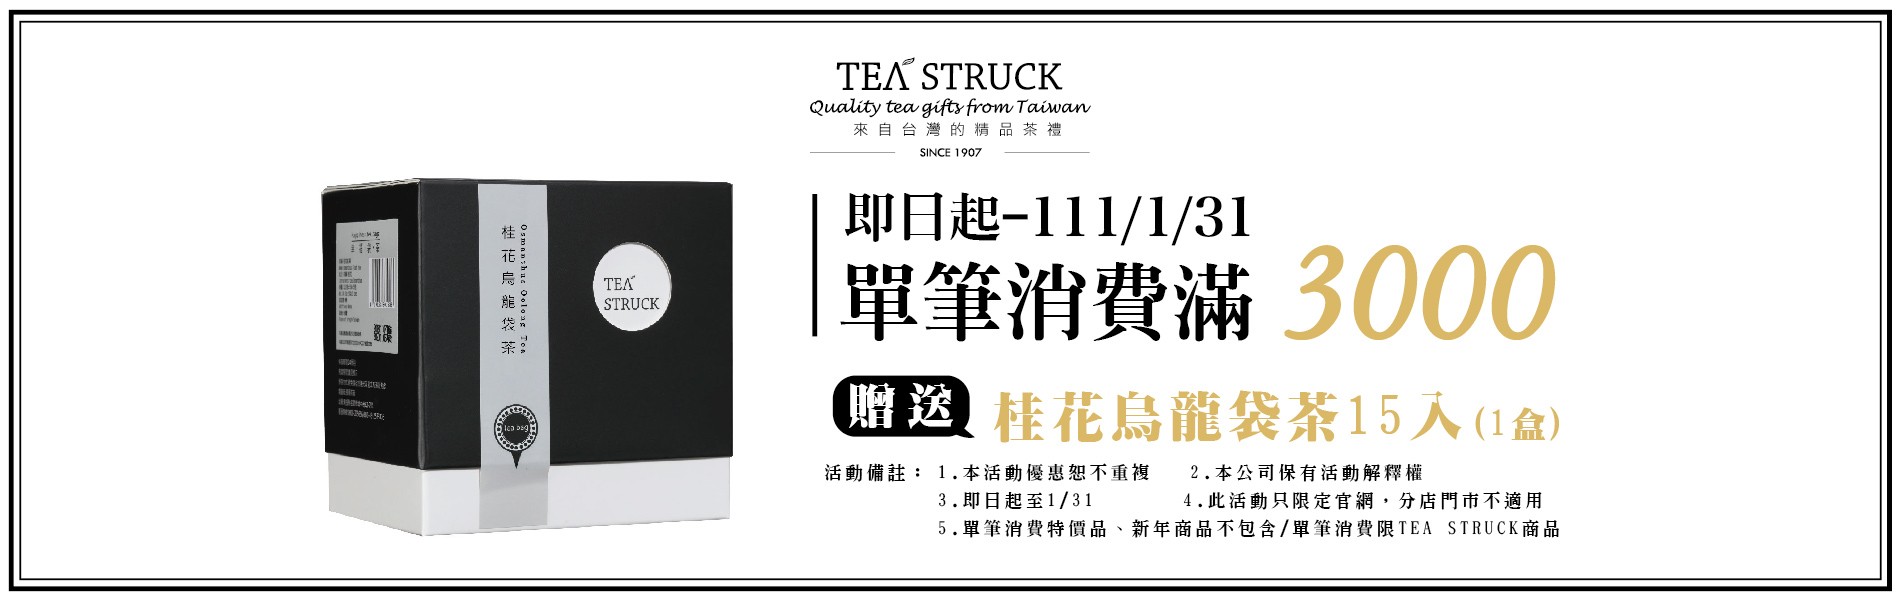 TEA STRUCK單筆消費滿3000贈桂花烏龍袋茶15入(1盒)